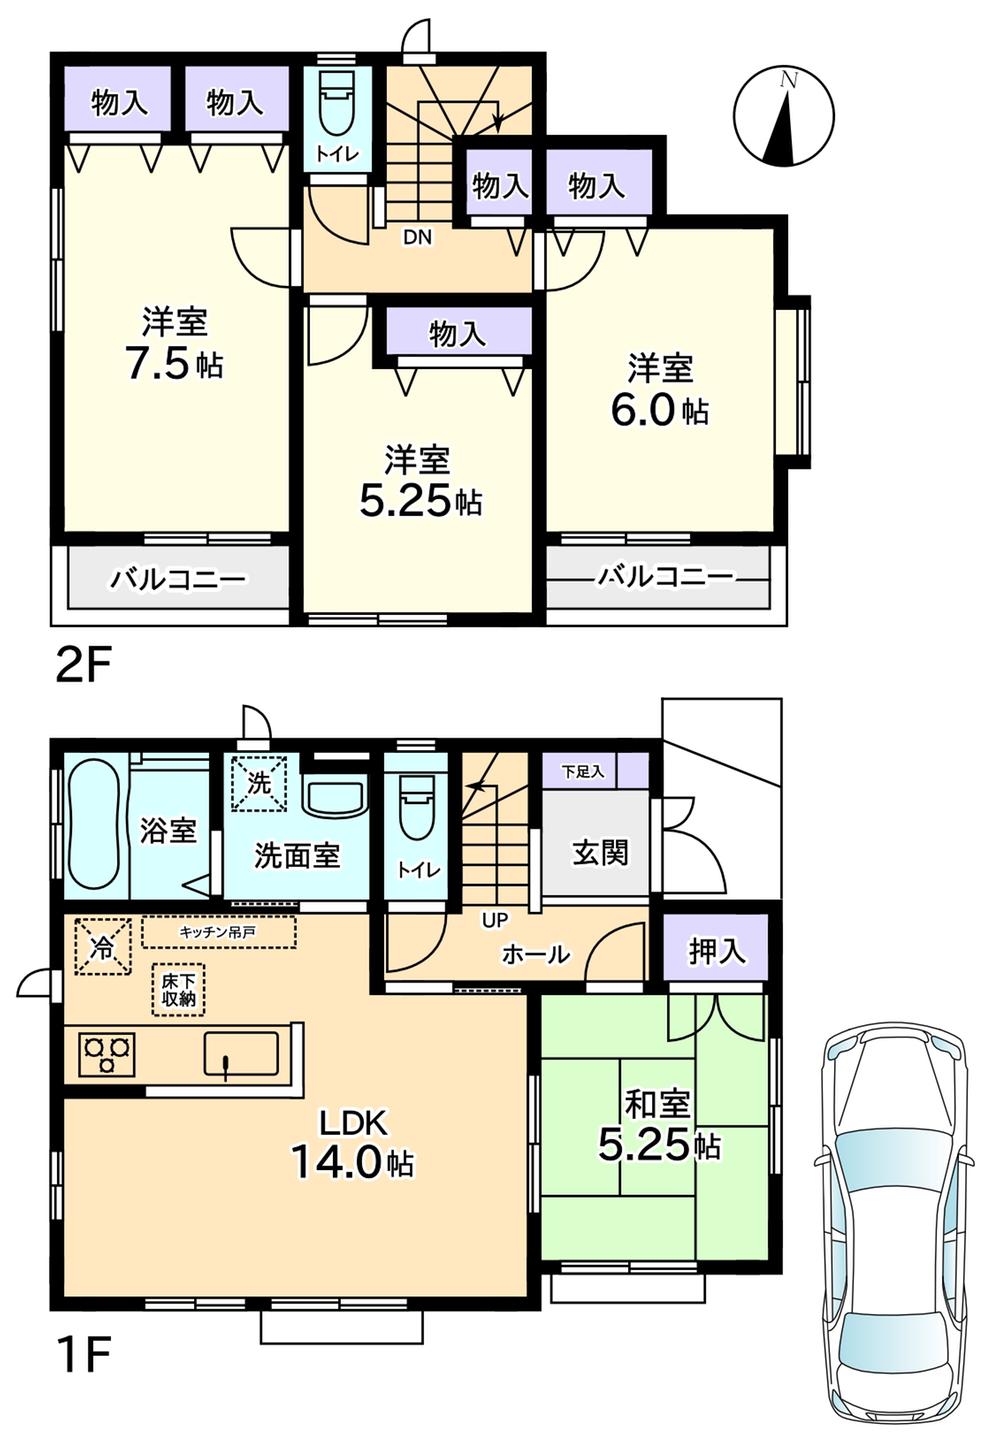 Floor plan. (E Building), Price 41,800,000 yen, 4LDK, Land area 101.58 sq m , Building area 91.91 sq m